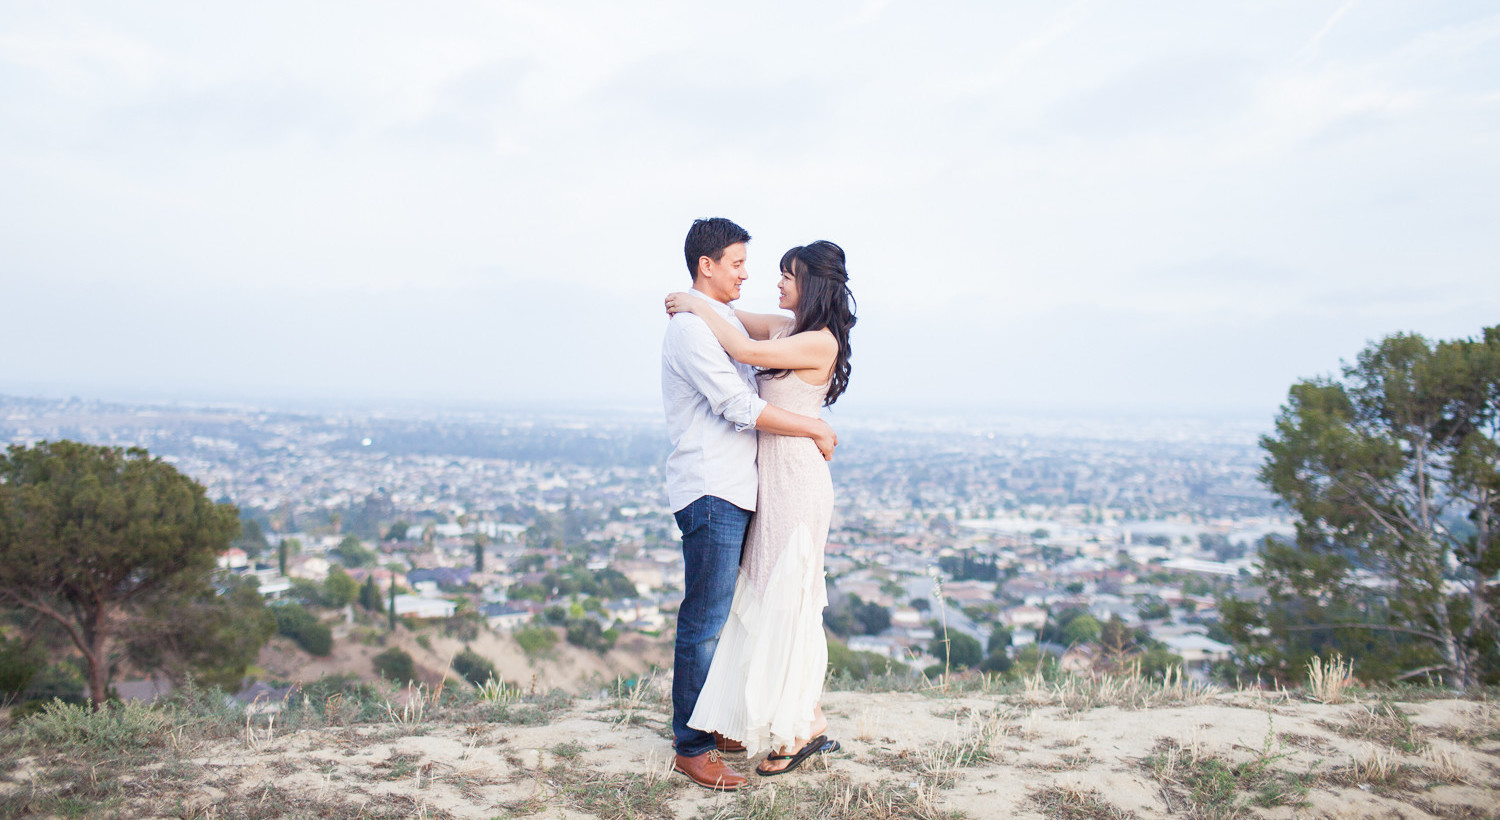 Jennifer & Eric’s Engagement Session | Arcadia Arboretum & Los Angeles, CA